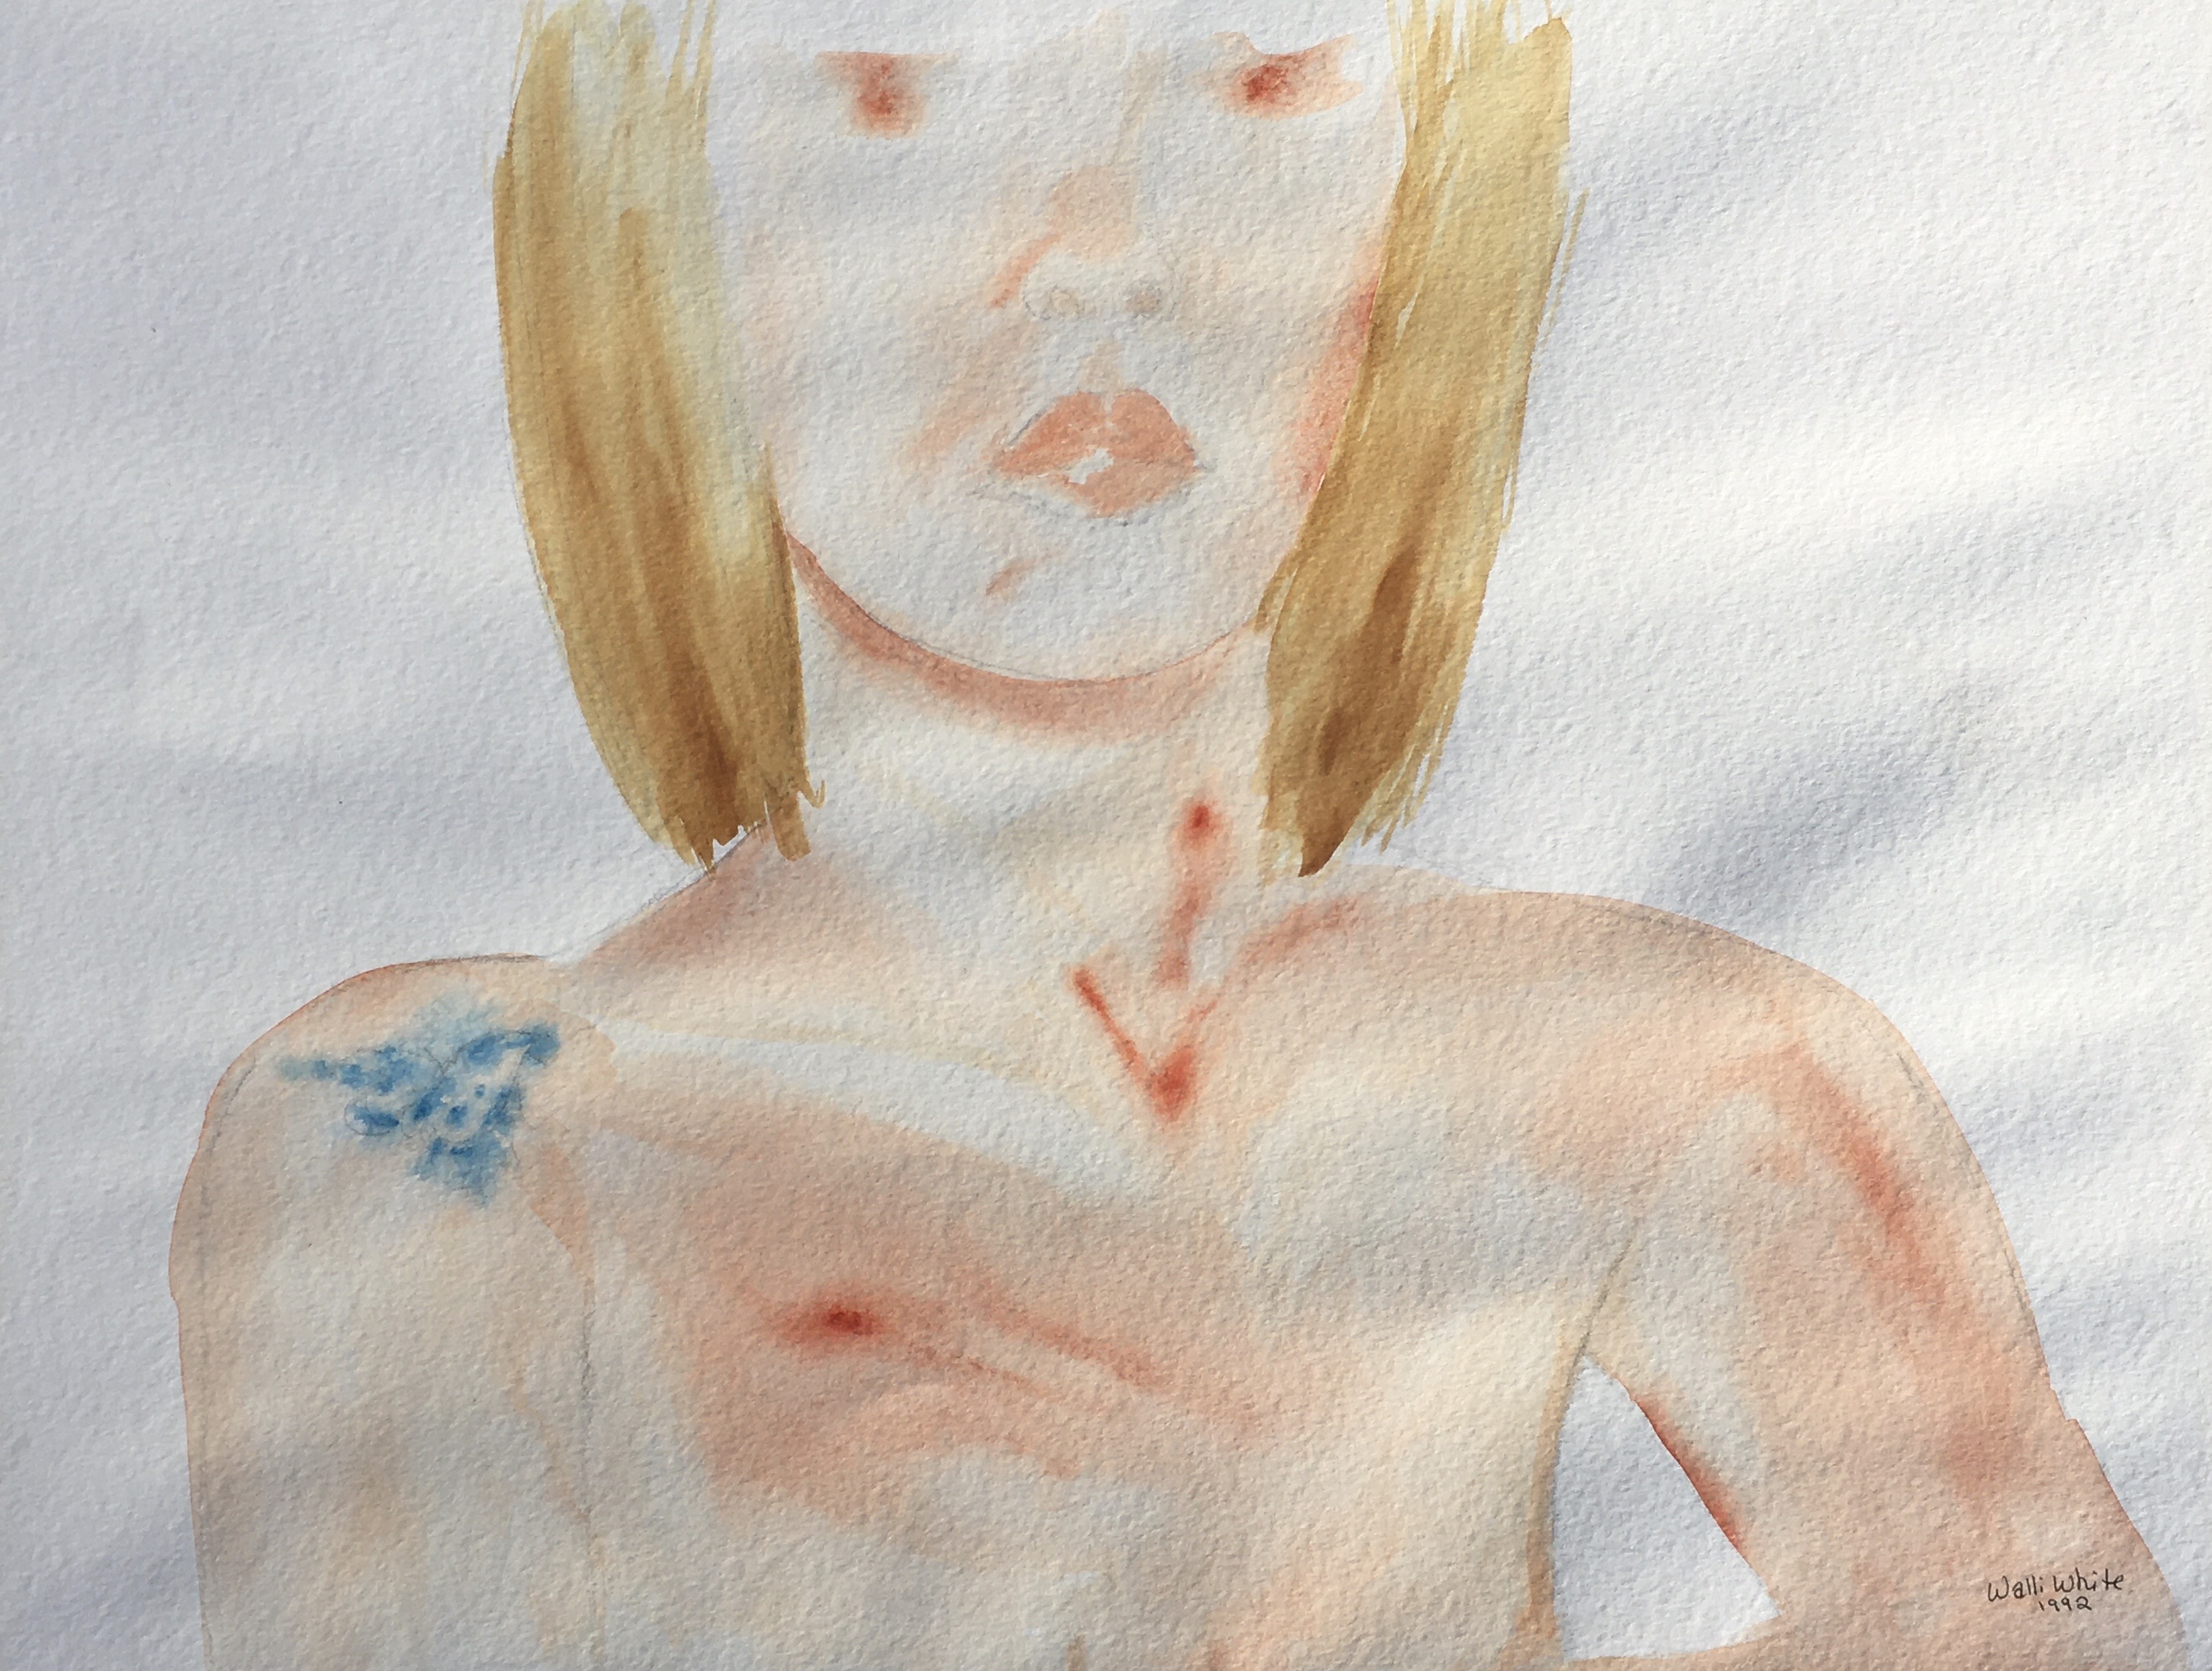 Self Portrait, Watercolor, 1992
Watercolor and Pencil on Watercolor Paper
20"W x 15"H, Walli White, artist